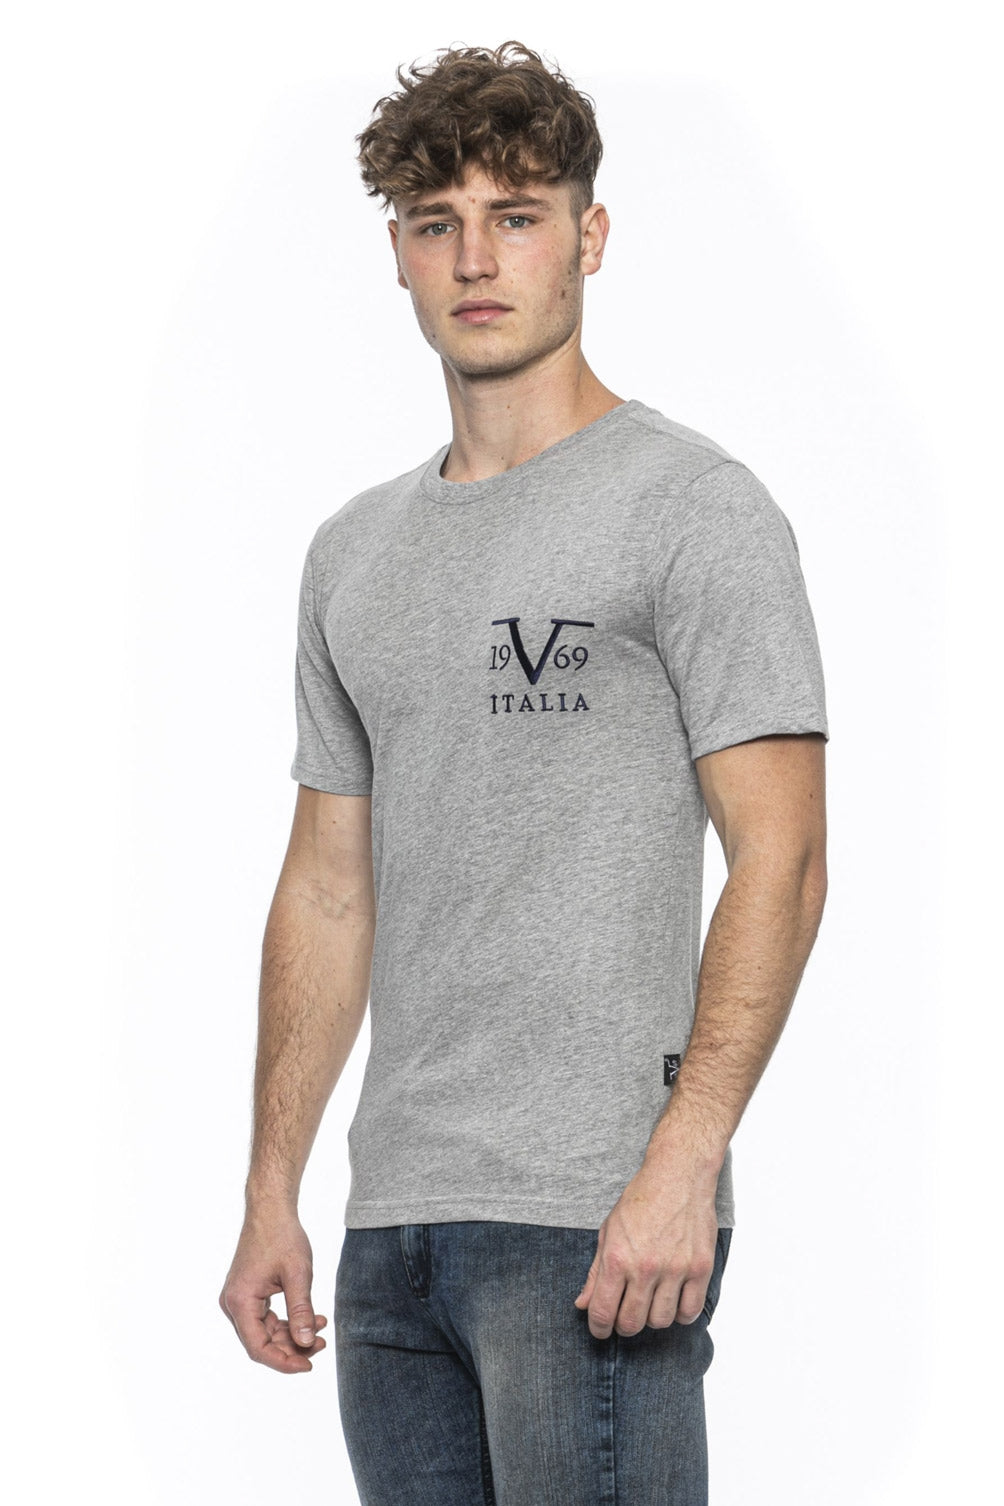 19V69 Italia Mens T-Shirt Grey TROY GREY